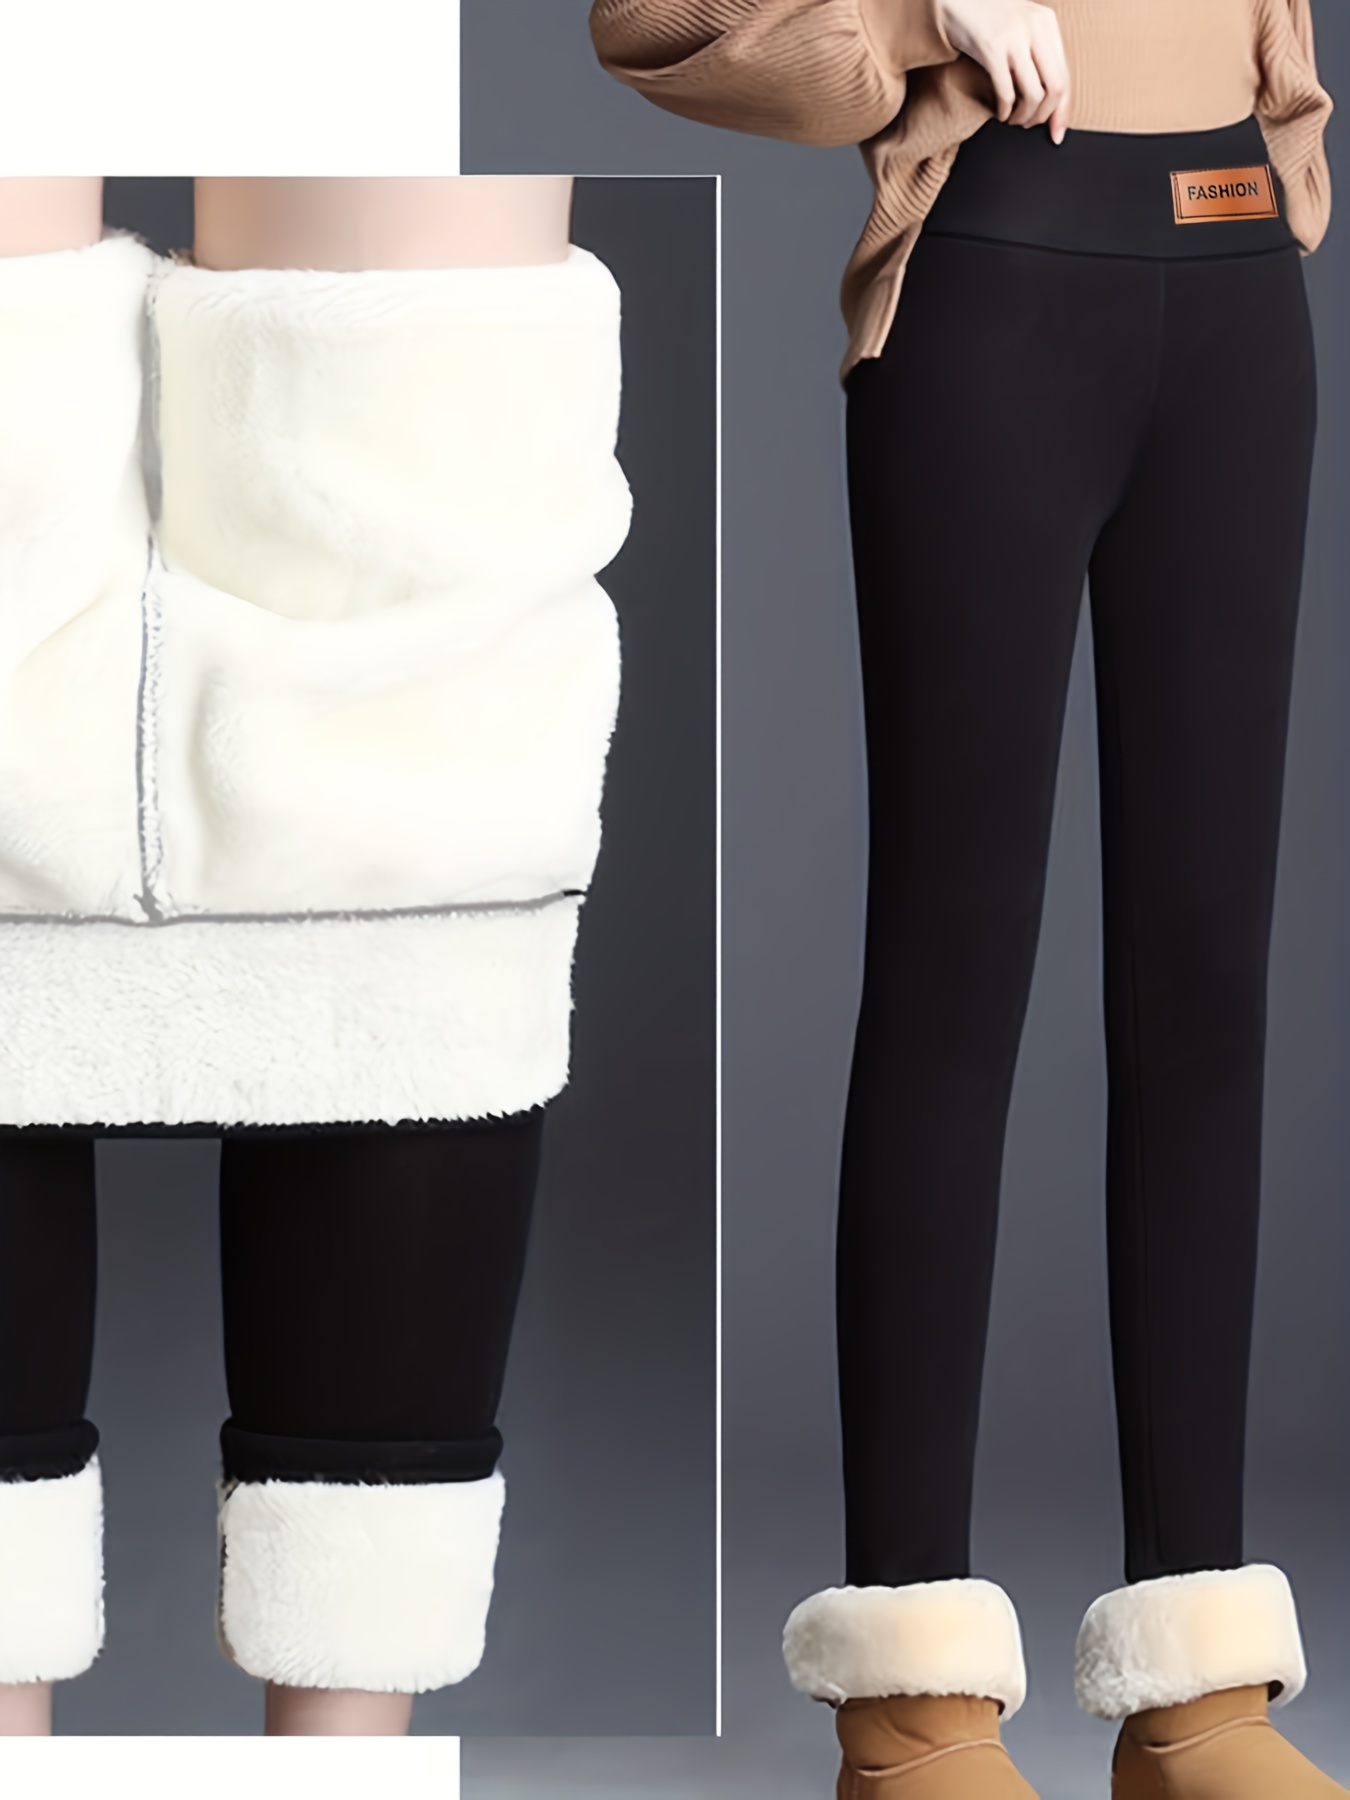 Extra Warm Ladies Legging Thermal Winter Black Thick Fur Fleece Lined  Legging